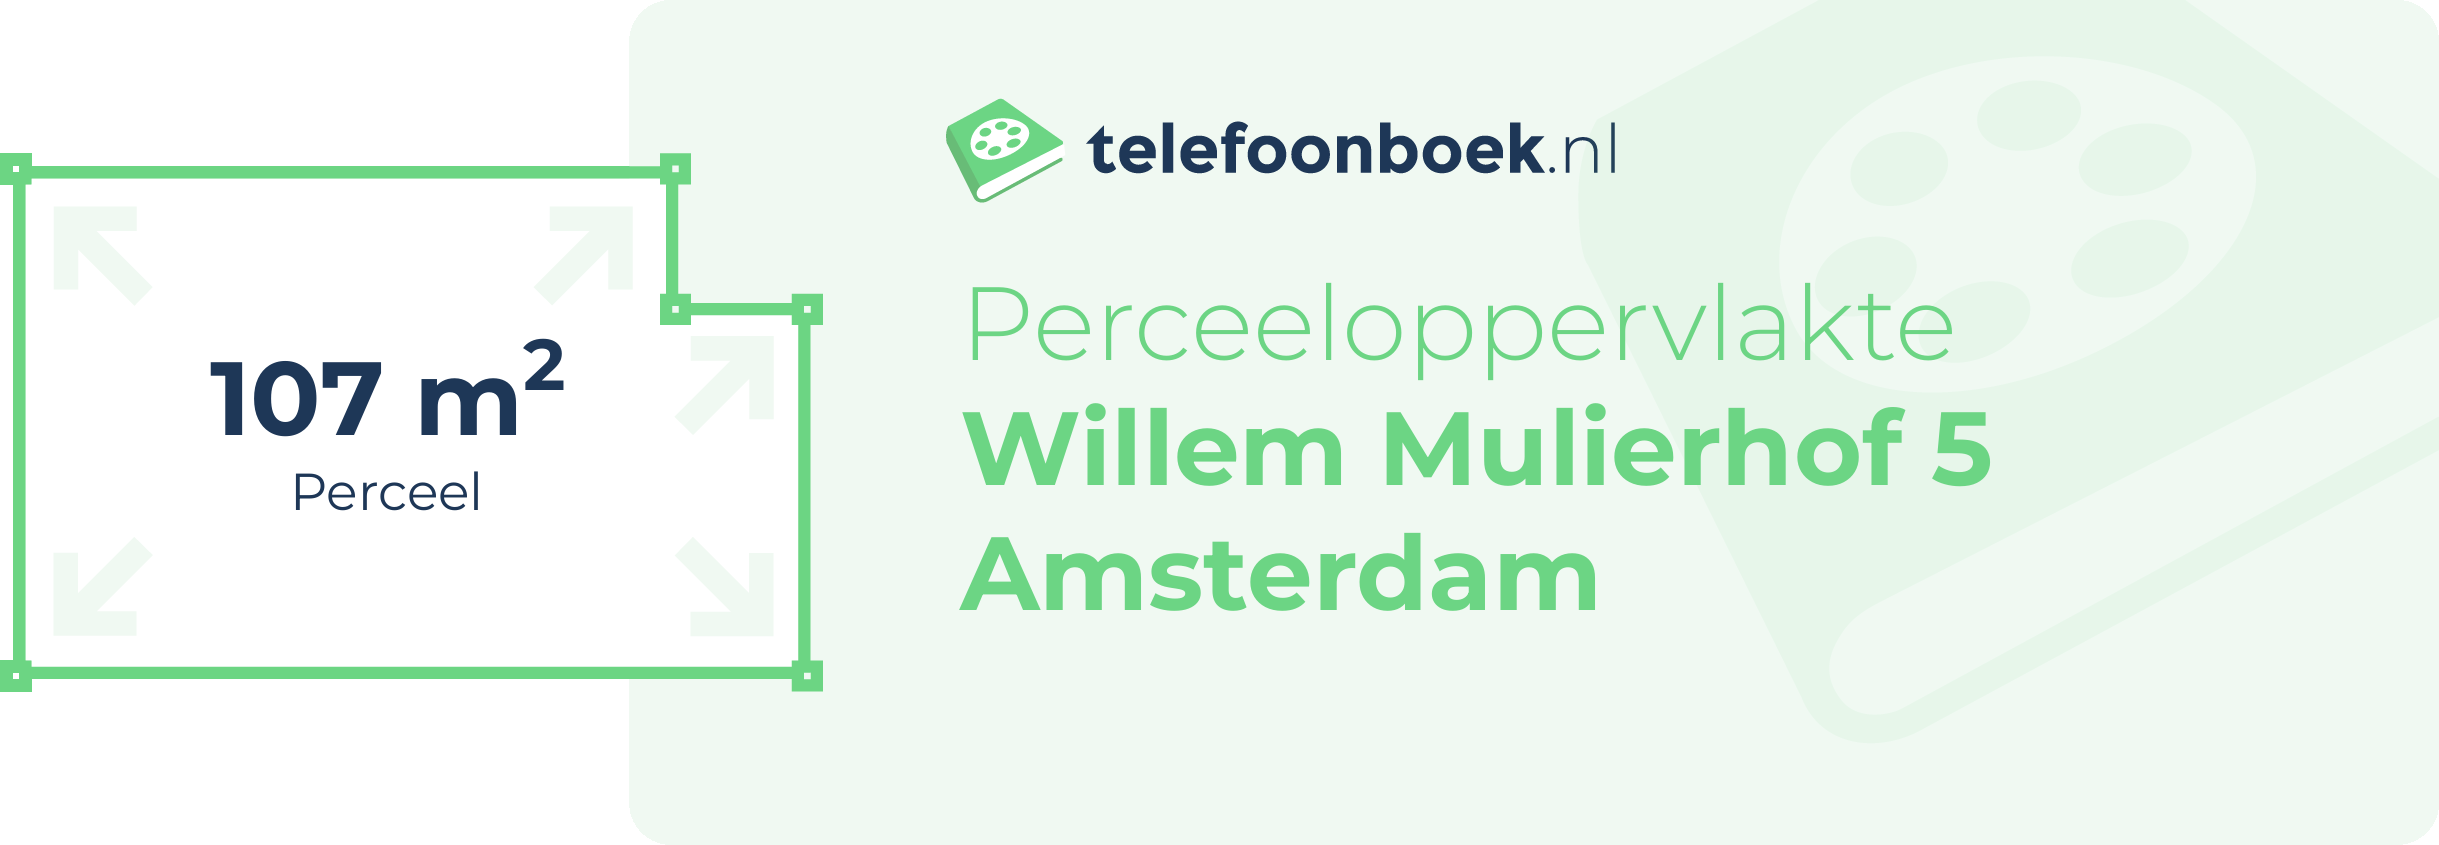 Perceeloppervlakte Willem Mulierhof 5 Amsterdam